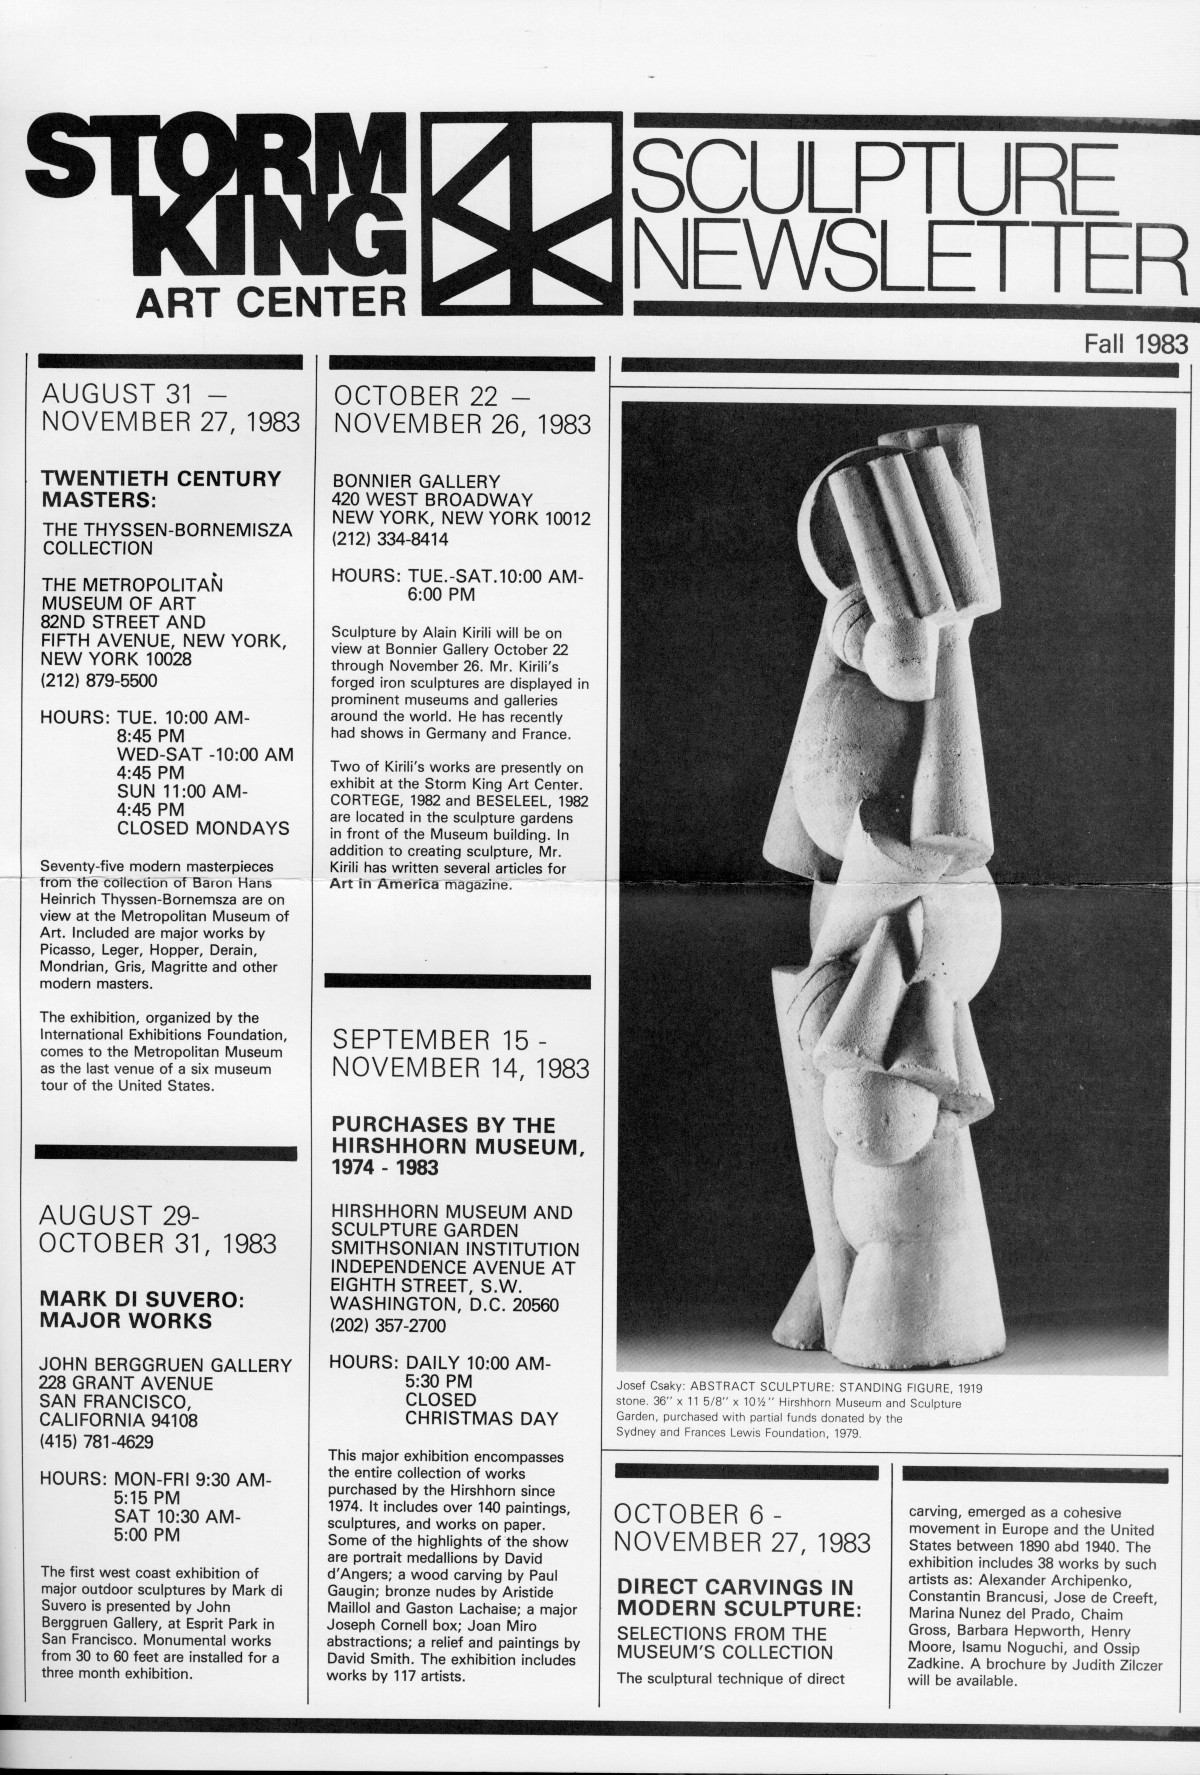 Storm King Art Center Newsletter, Fall 1983